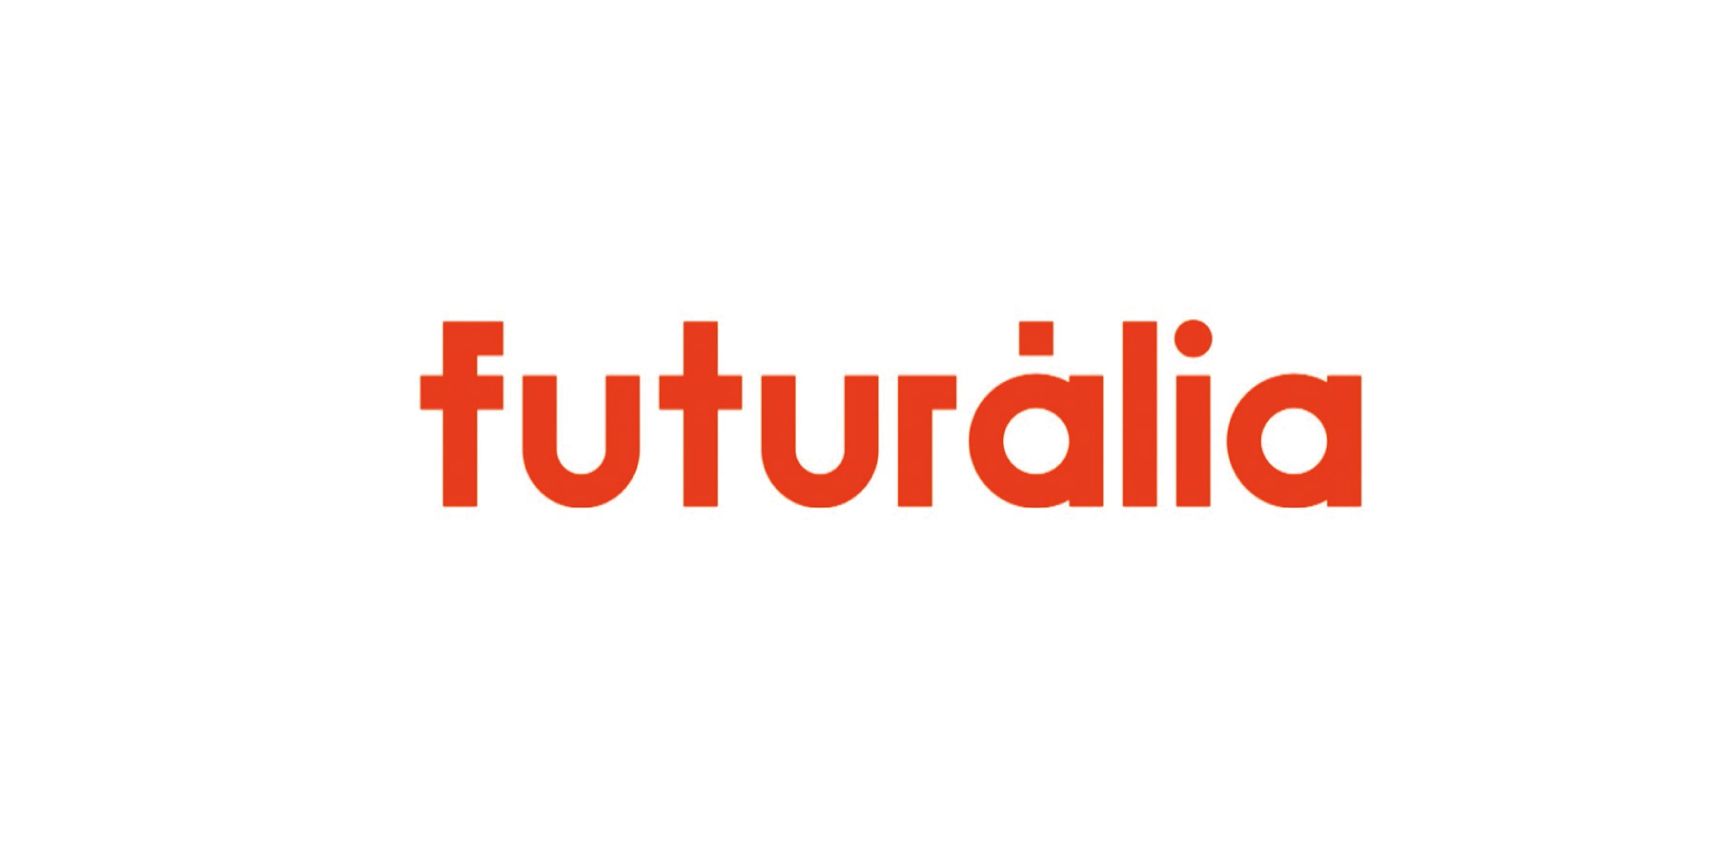 Logo of the Futurália fair in Porto